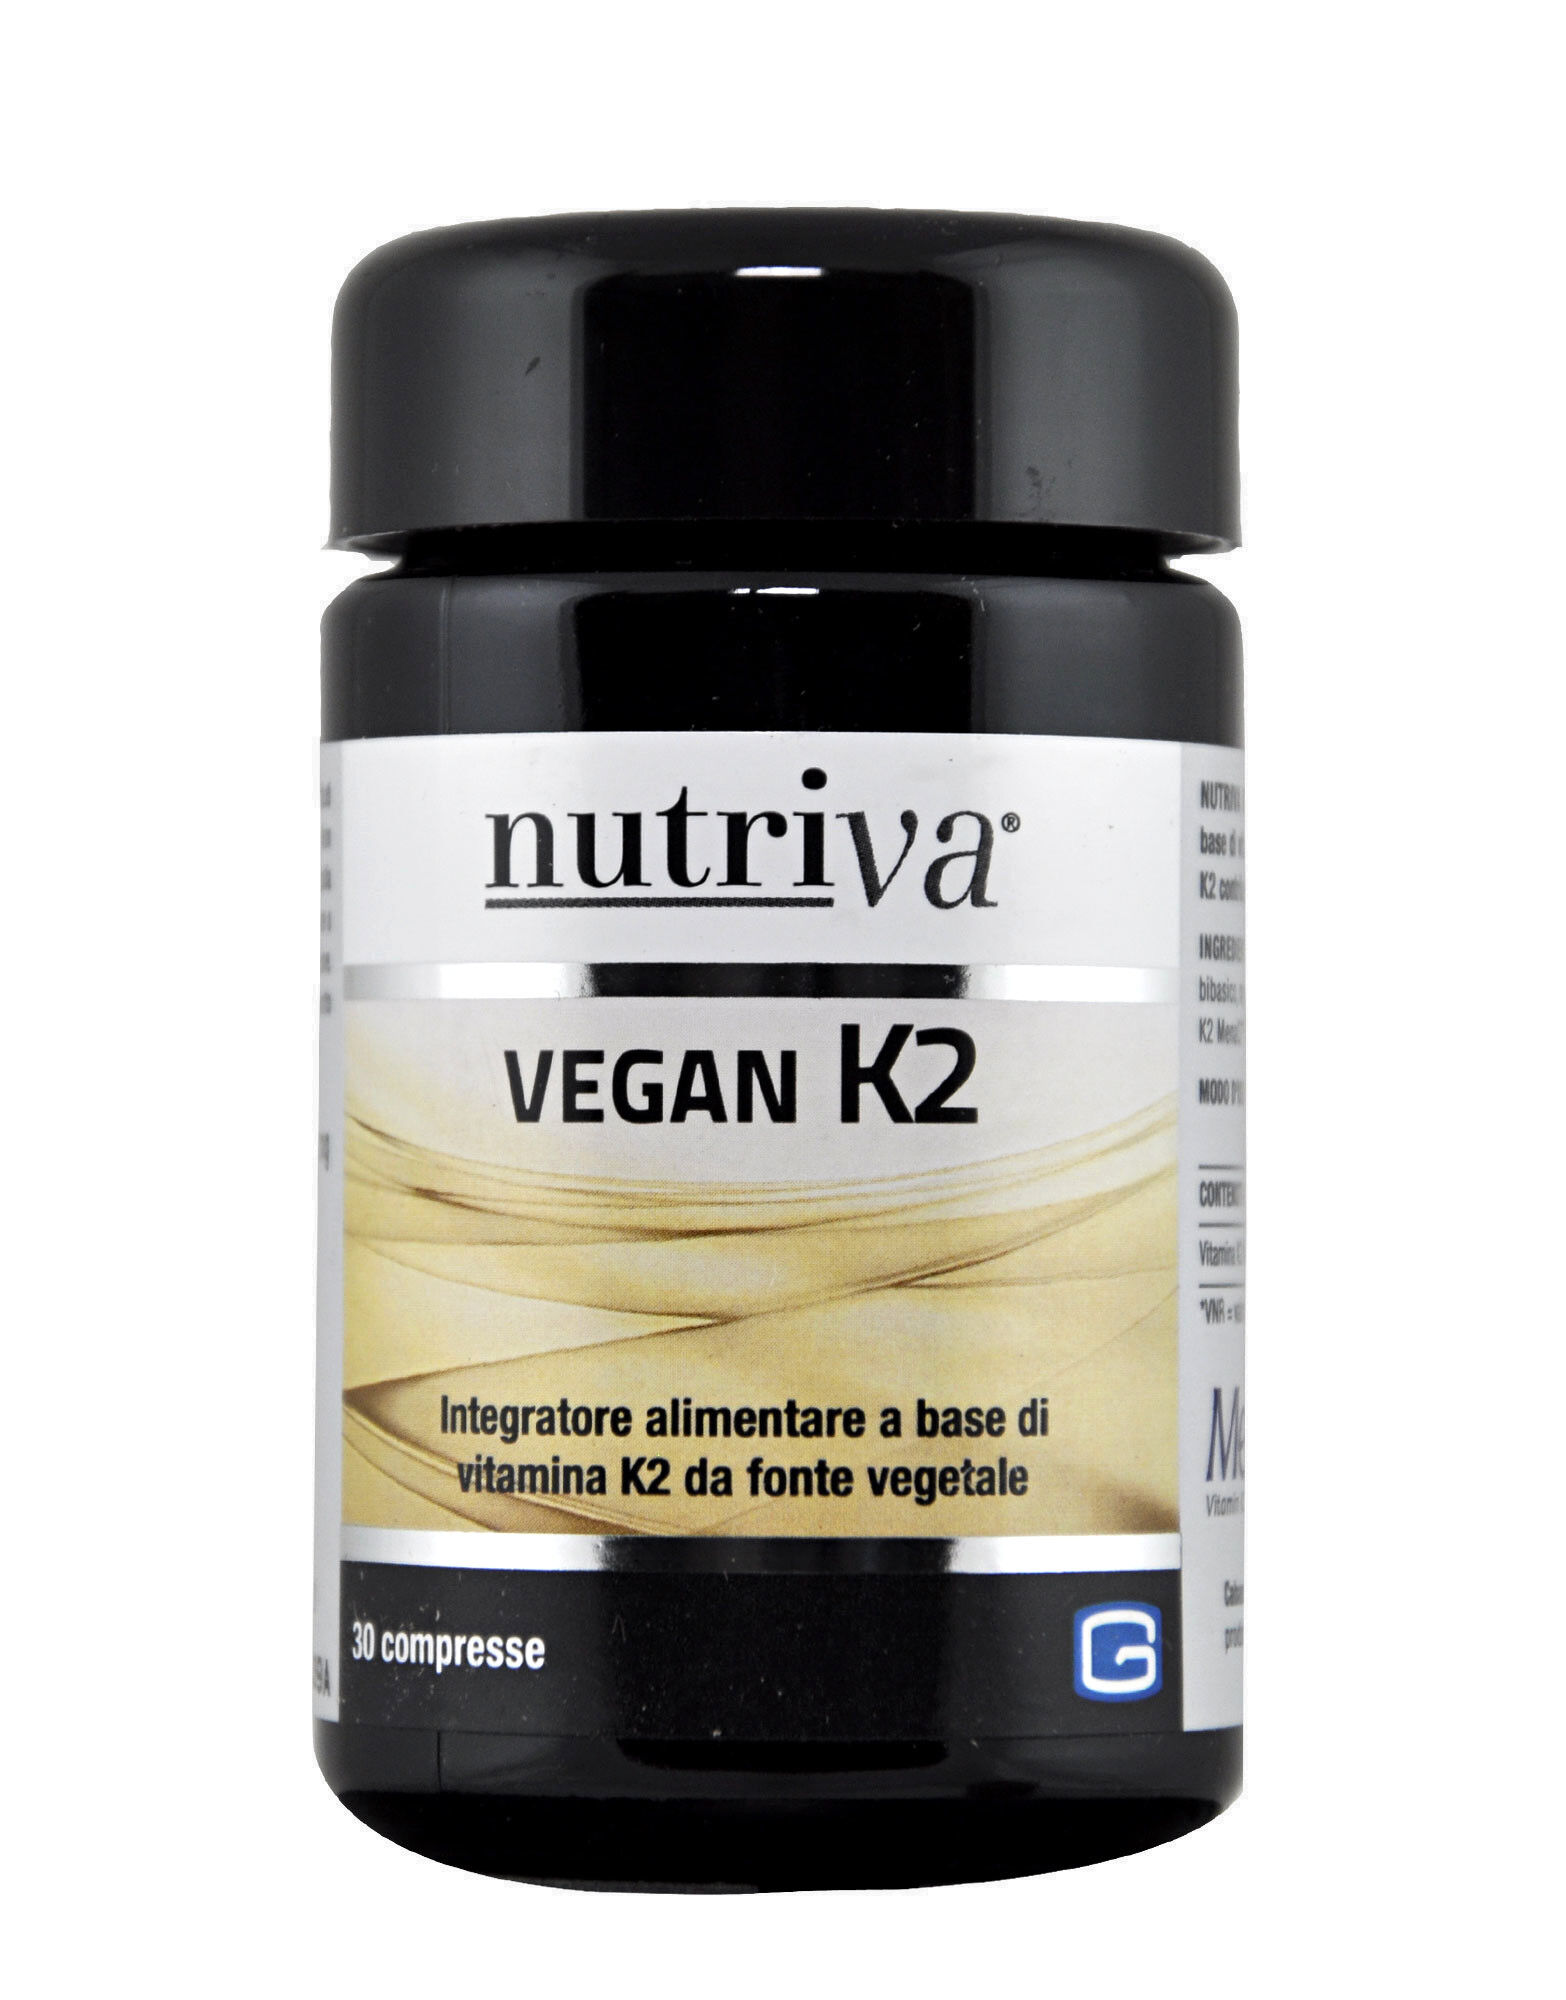 CABASSI & GIURIATI Nutriva - Vegan K2 30 Compresse